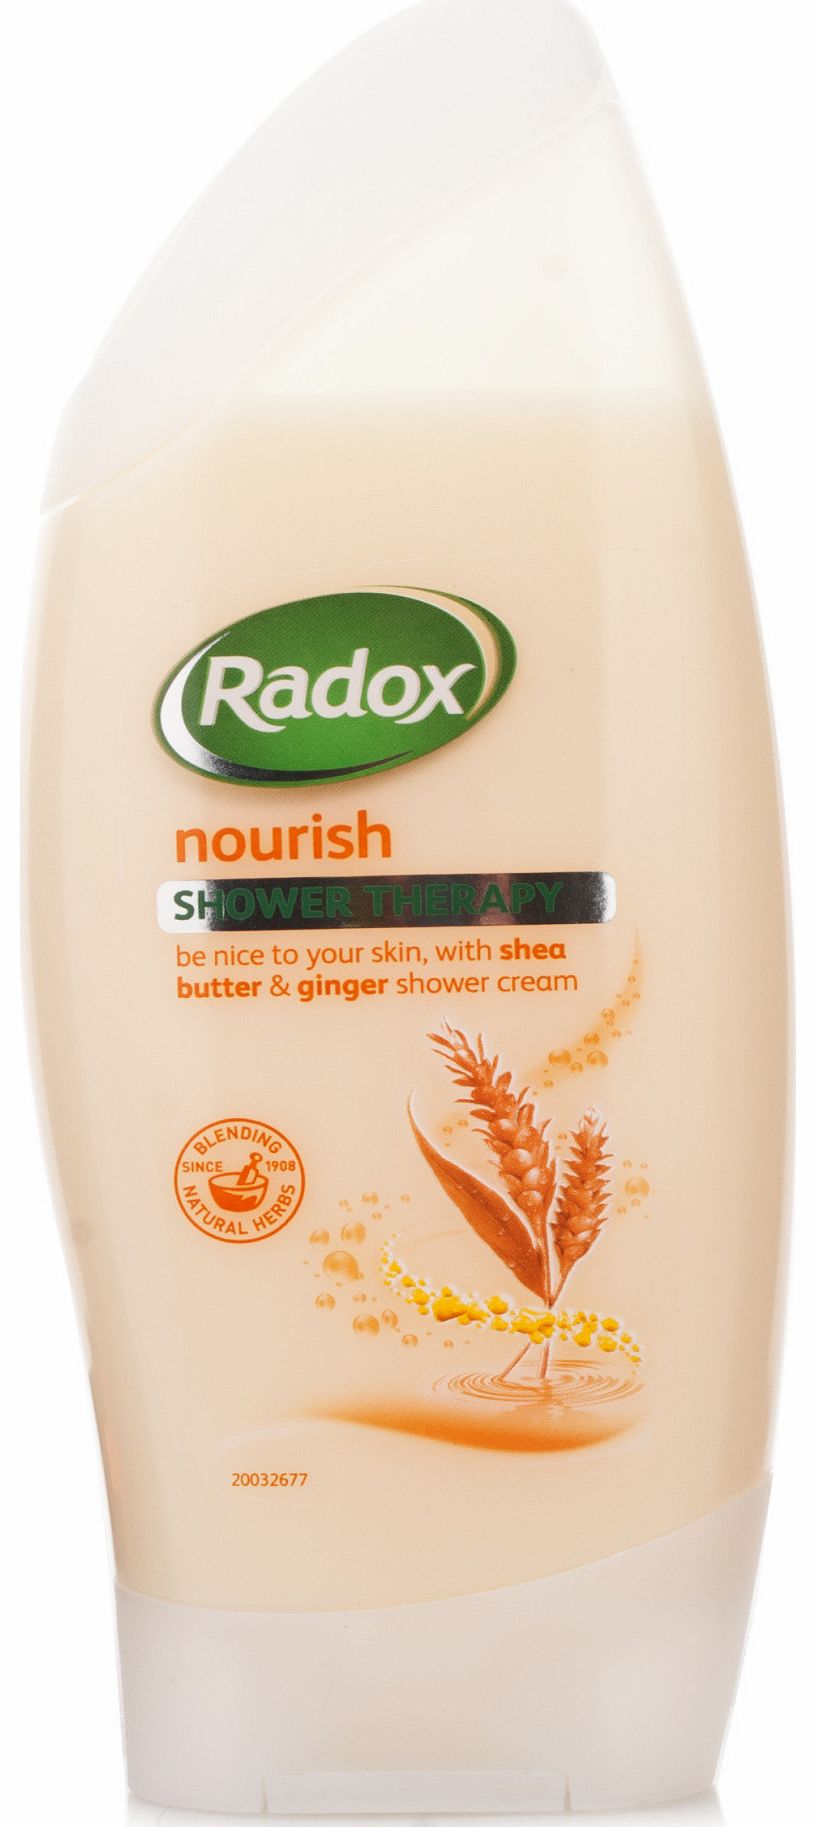 Radox Nourish Shower Cream